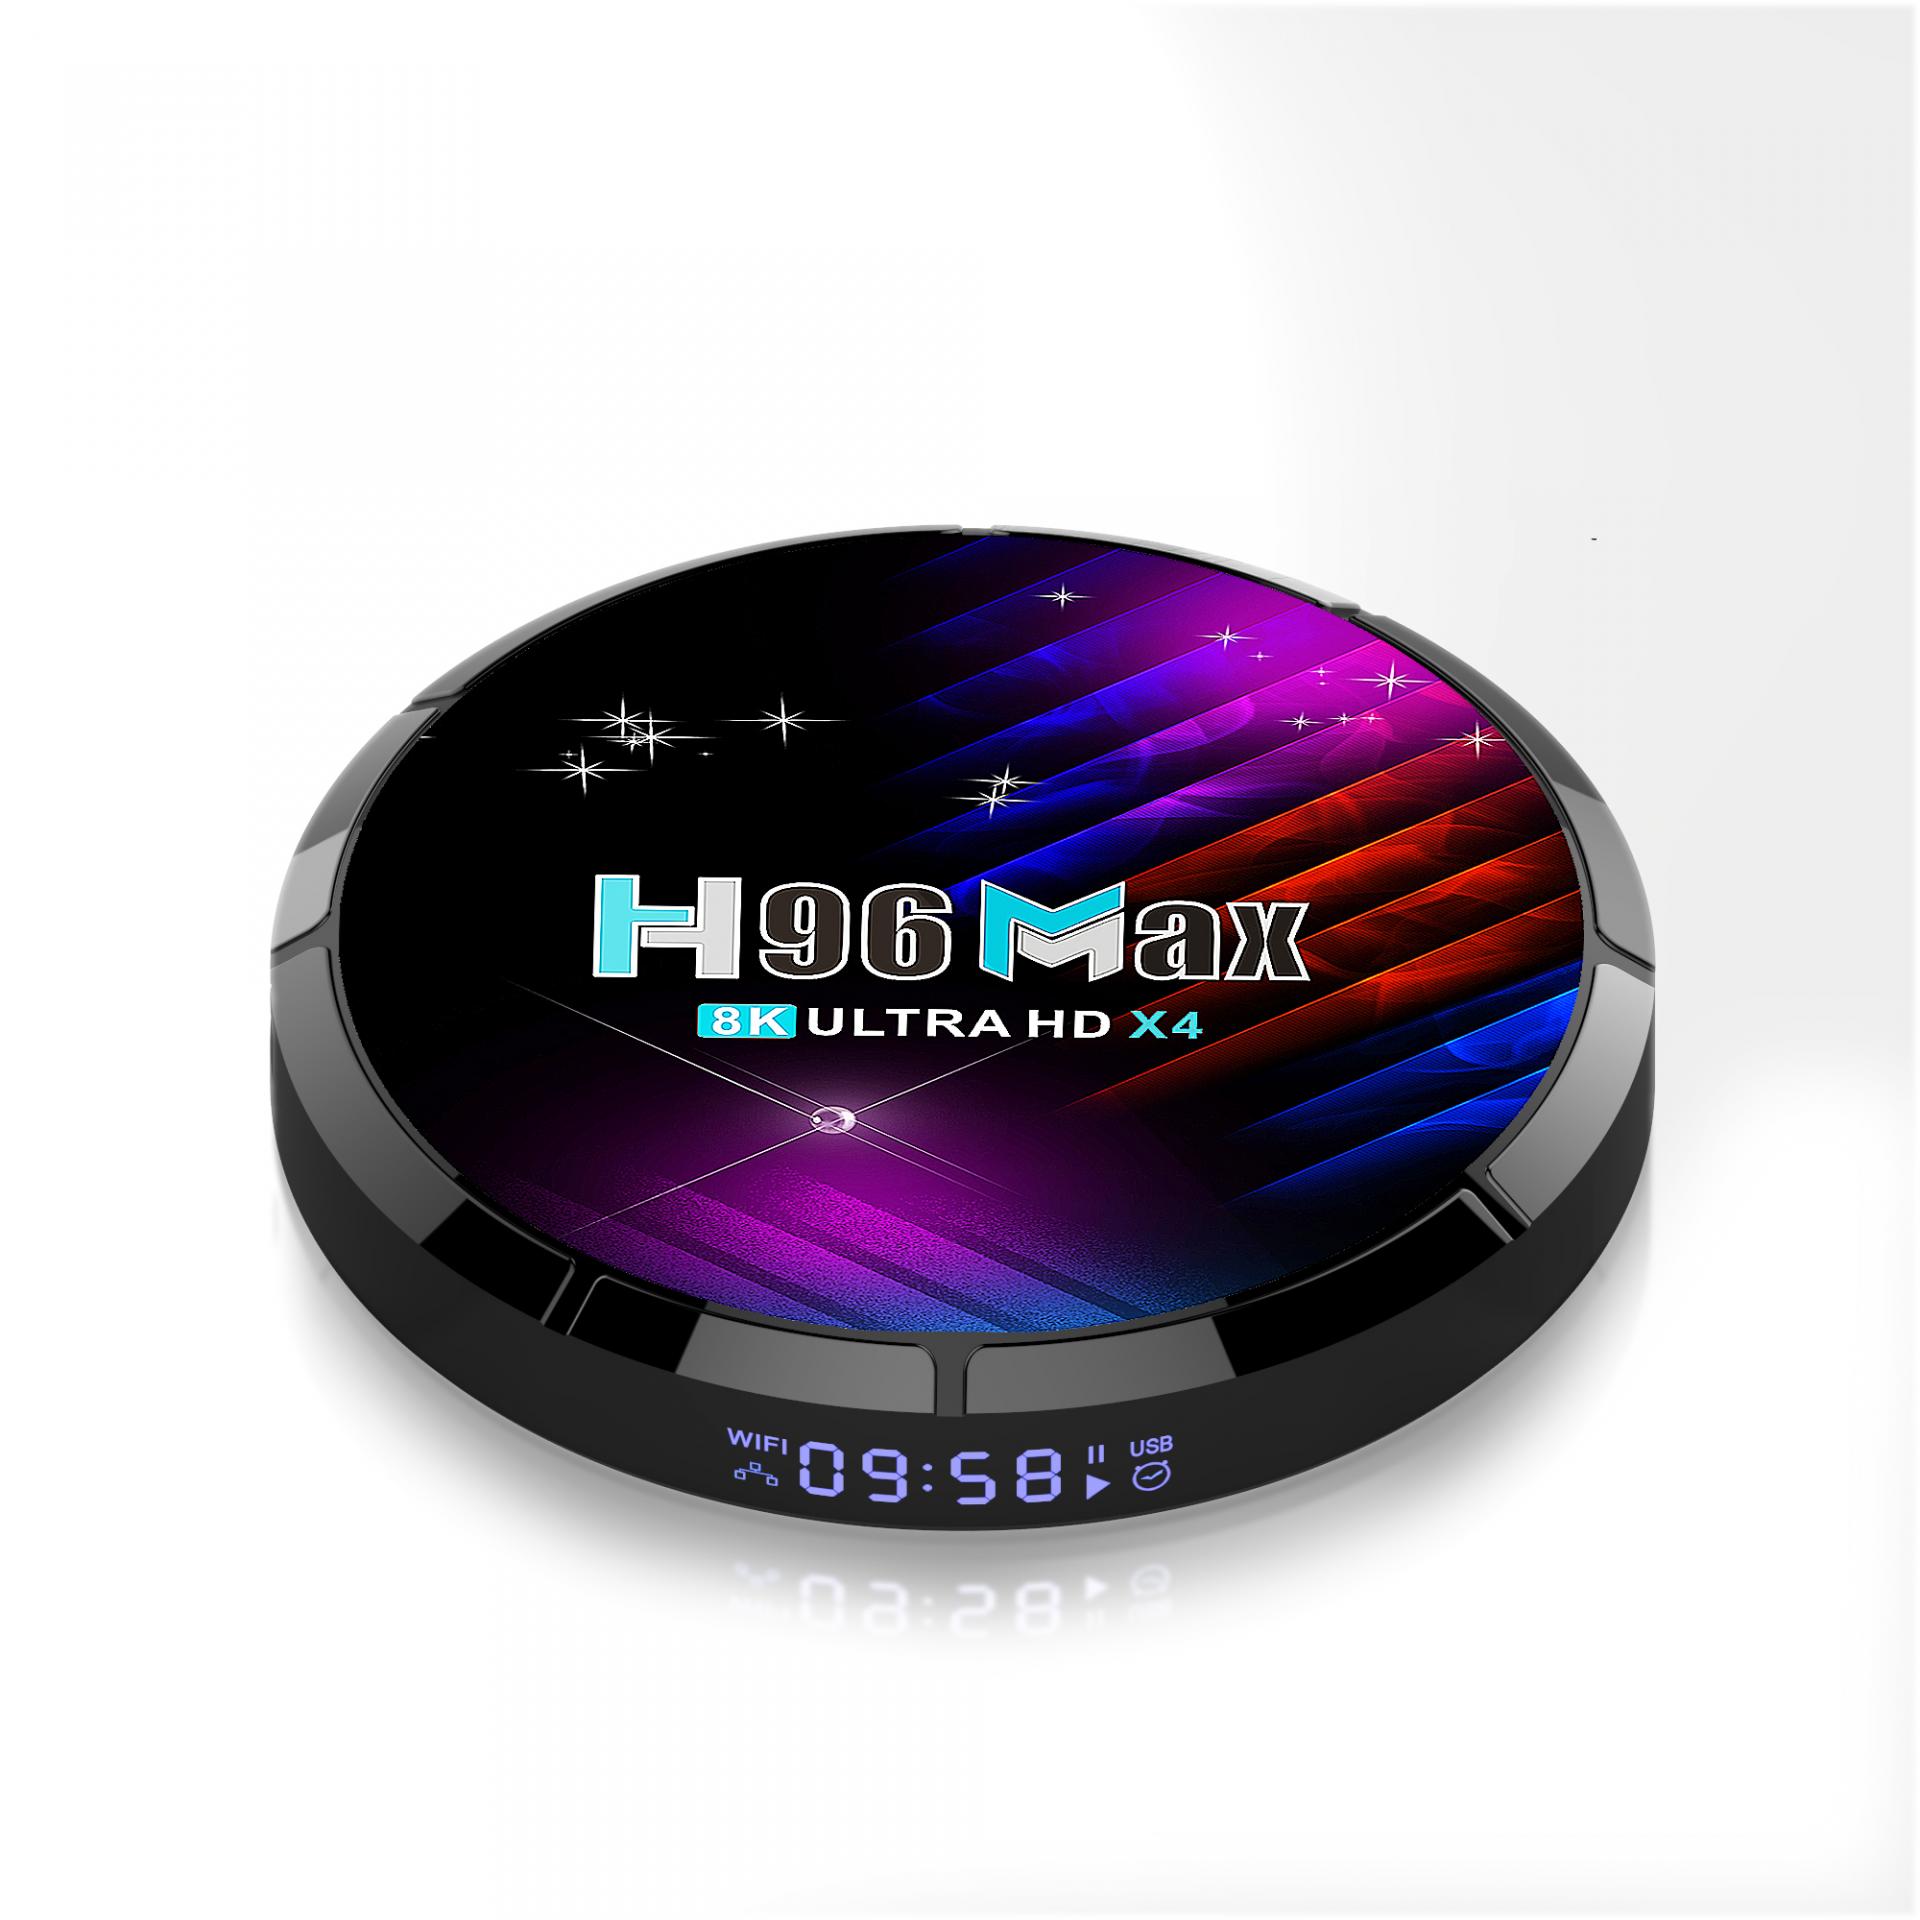 Wholesale H96 Max X4 Amlogic S905X4 tv box 8K Android 11.0 media box hd 